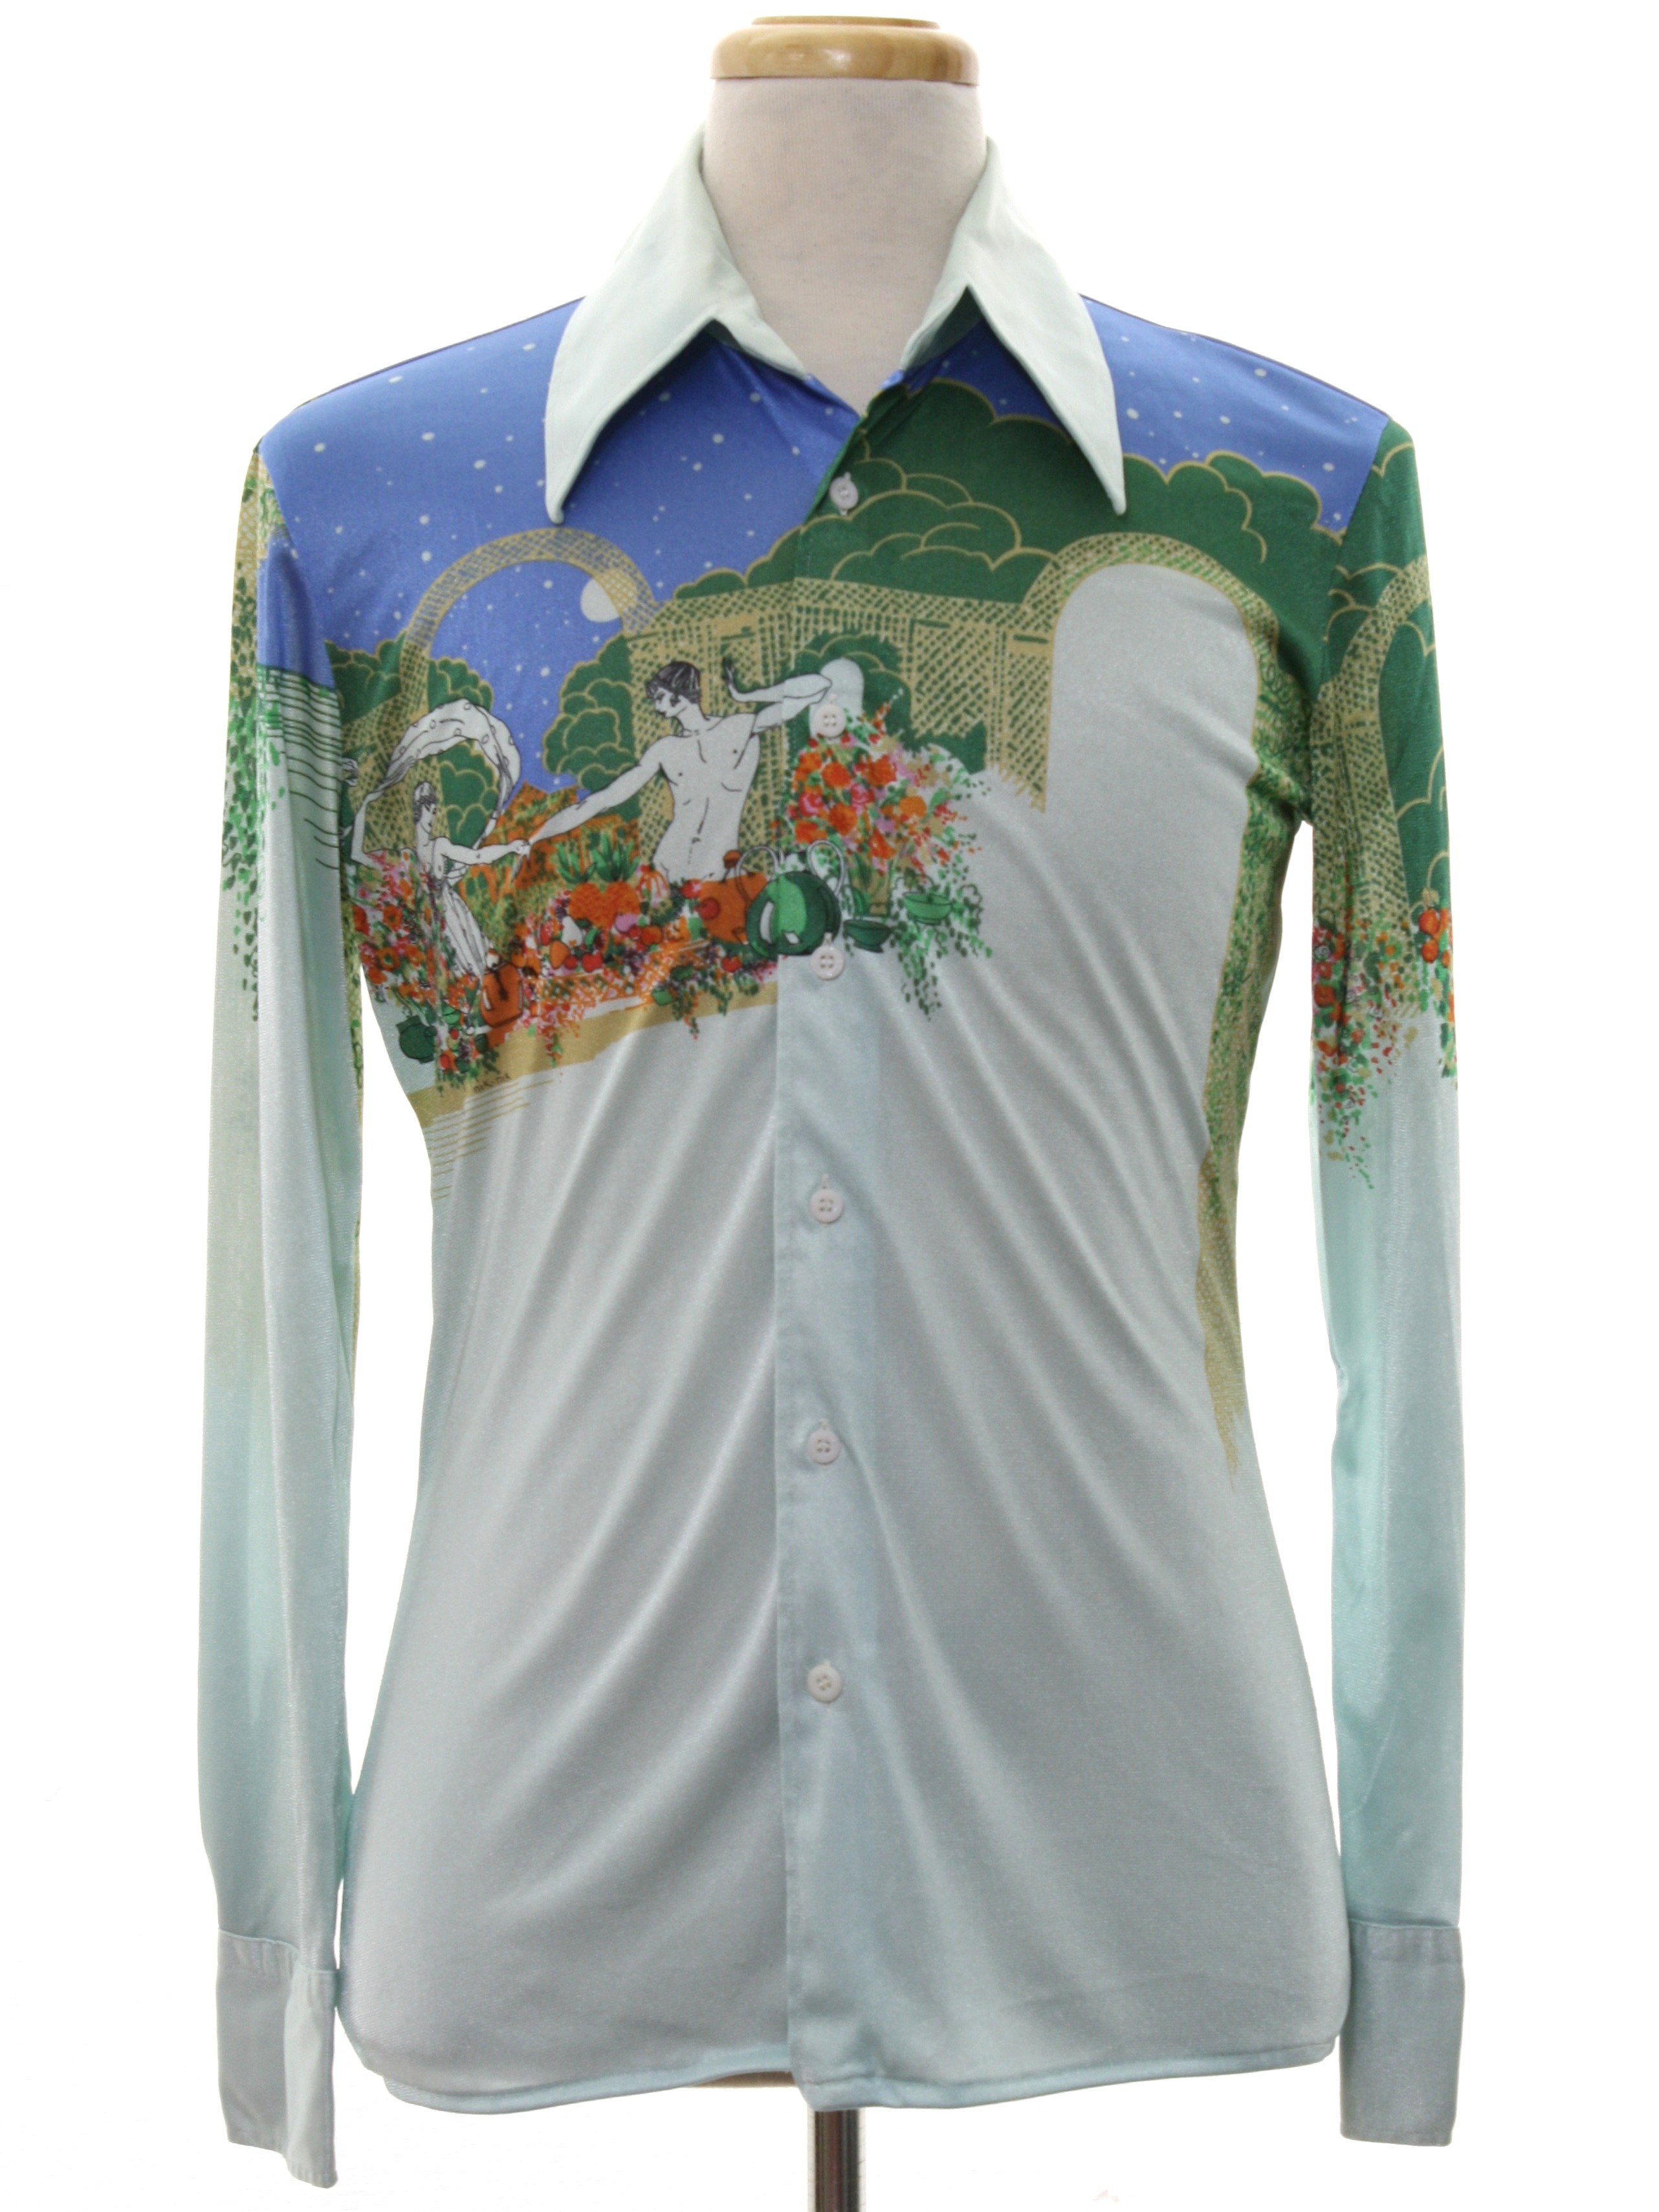 70s Nik Nik womens shirt 5/6